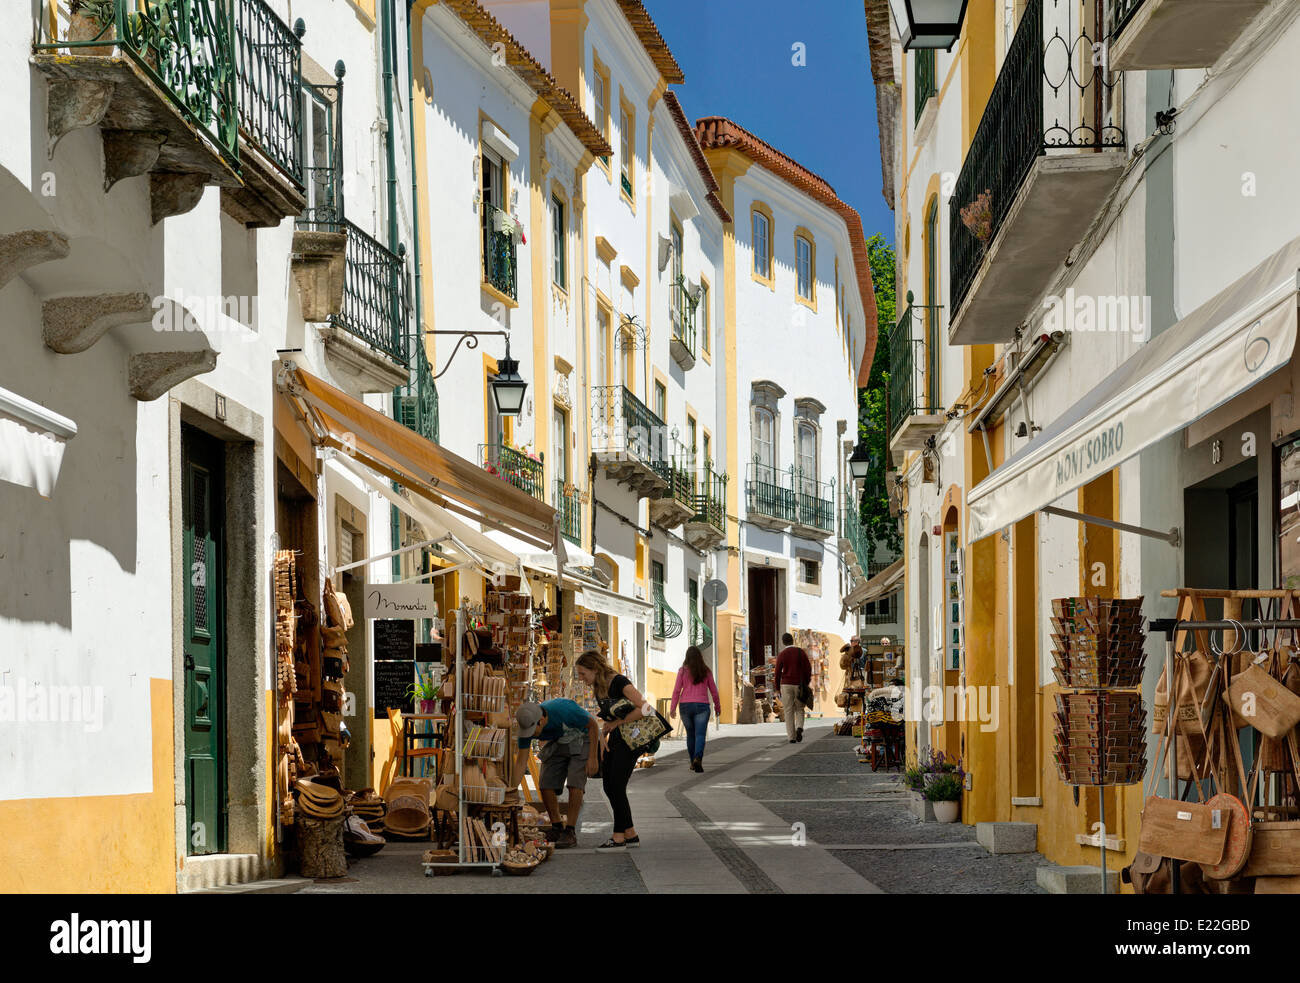 Portugal, the Alentejo, Évora, a narrow street lined with handicraft shops Stock Photo